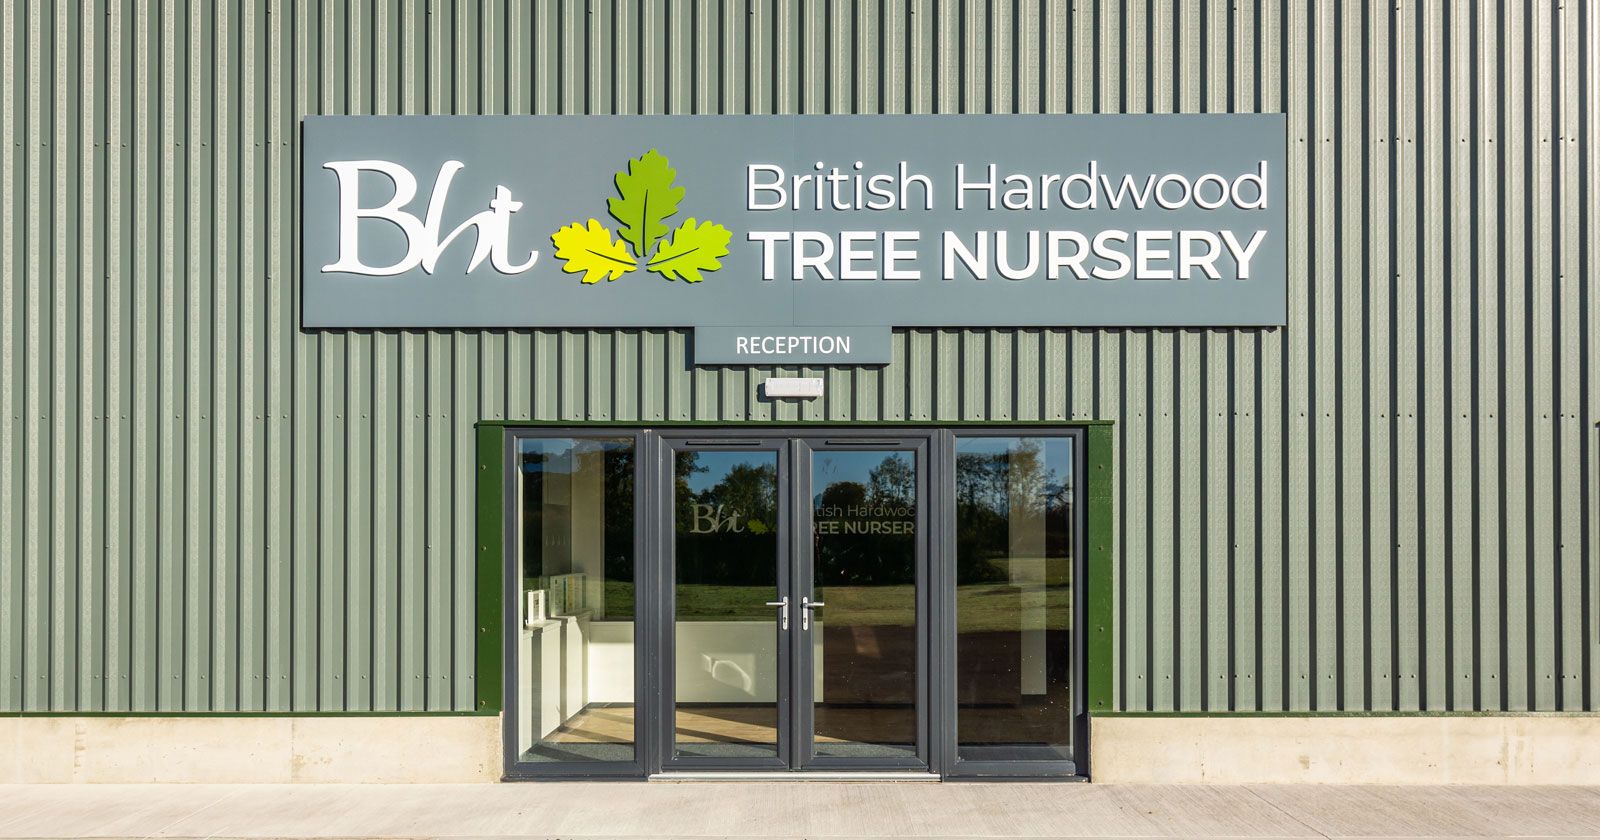 British Hardwood Tree Nursery Office Entrance and Signage